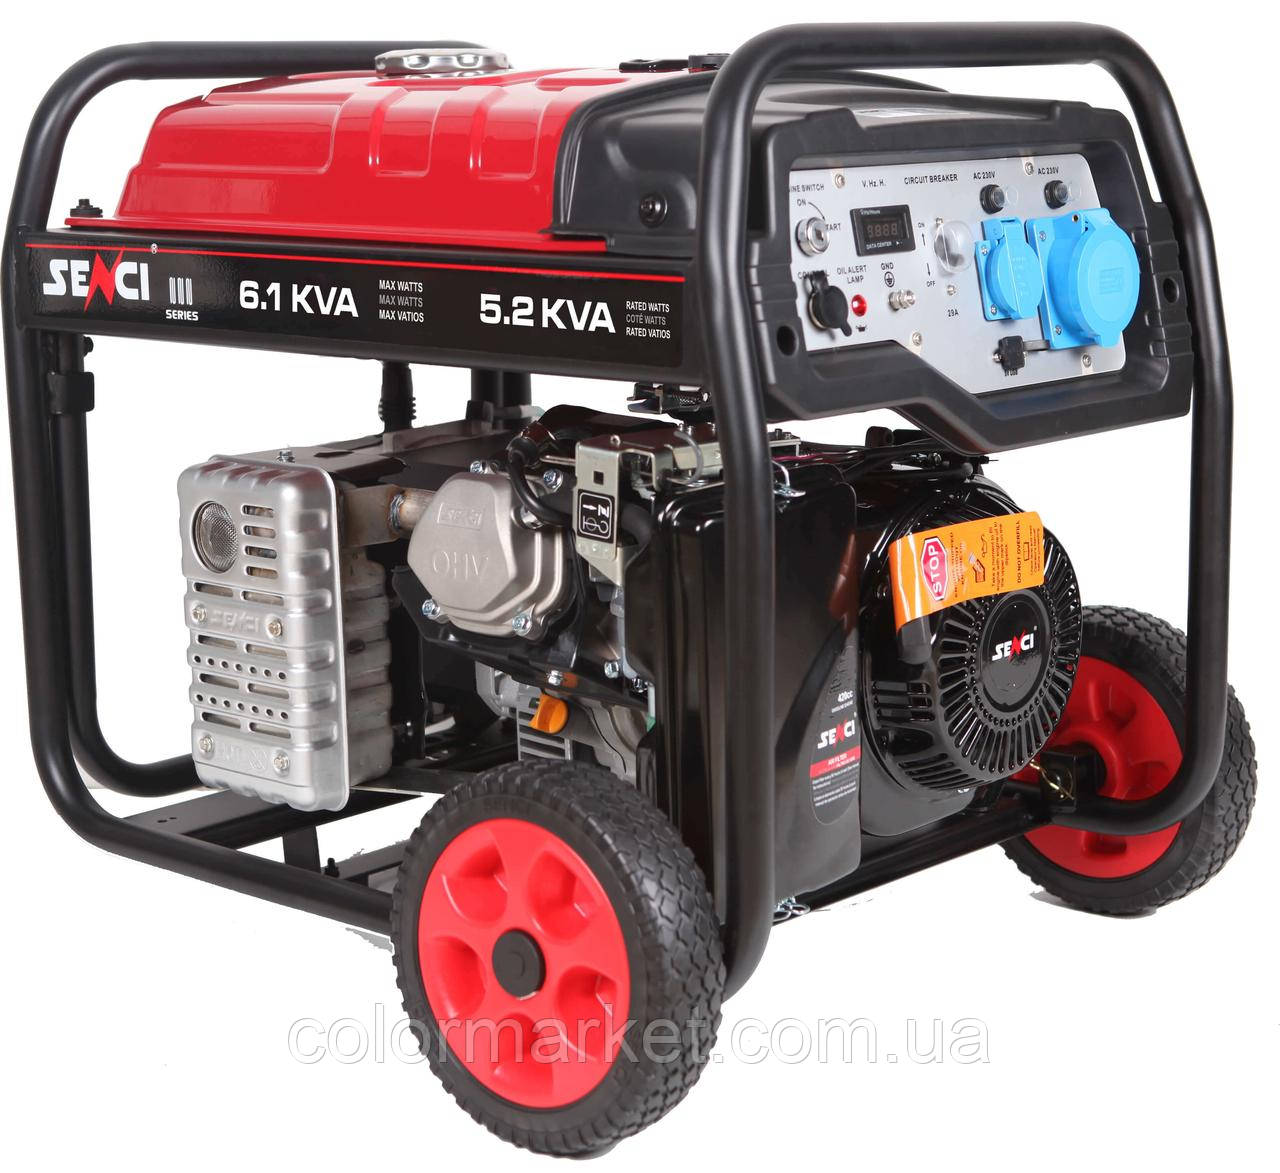 SC7800E Генератор бензиновий, 4,0 кВт, електрозапуск, колеса